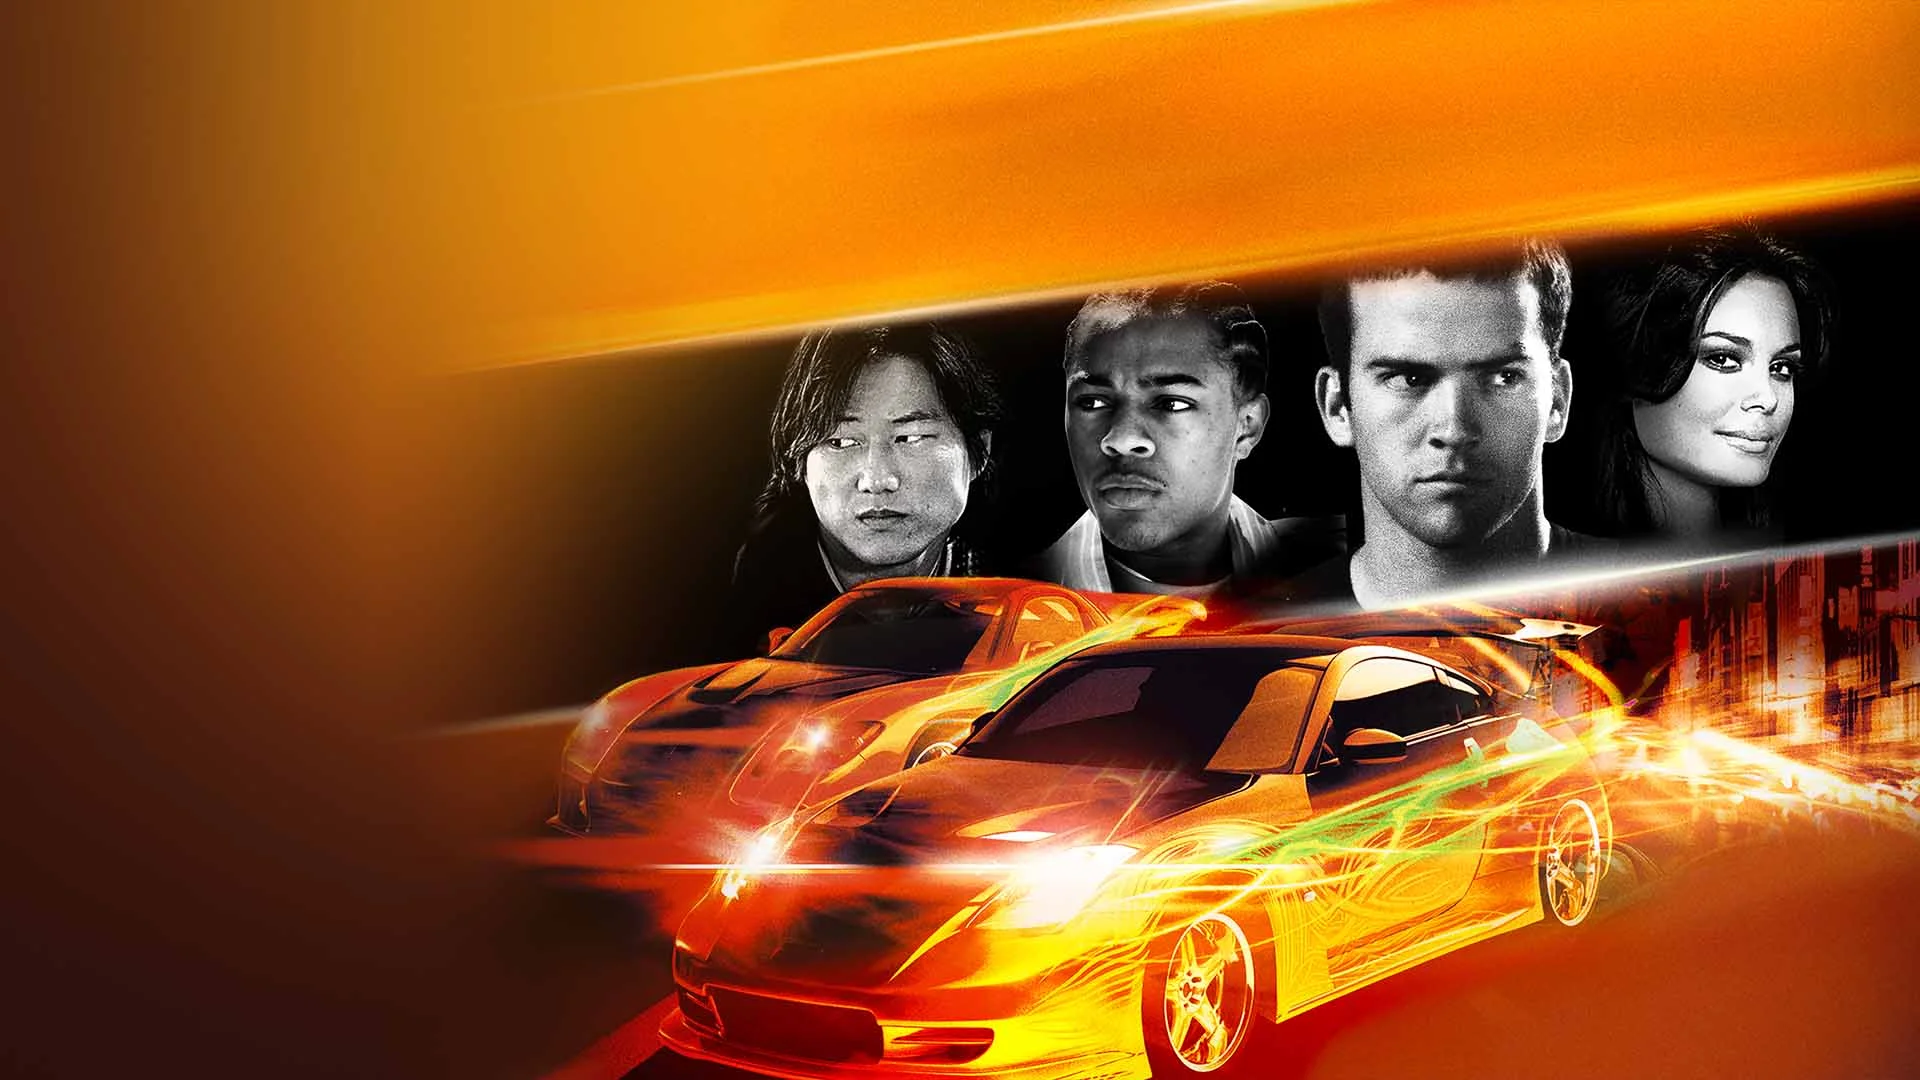 The Fast and the Furious 3 Tokyo Drift (2006) เร็ว...แรงทะลุนรก ซิ่งแหกพิกัดโตเกียว